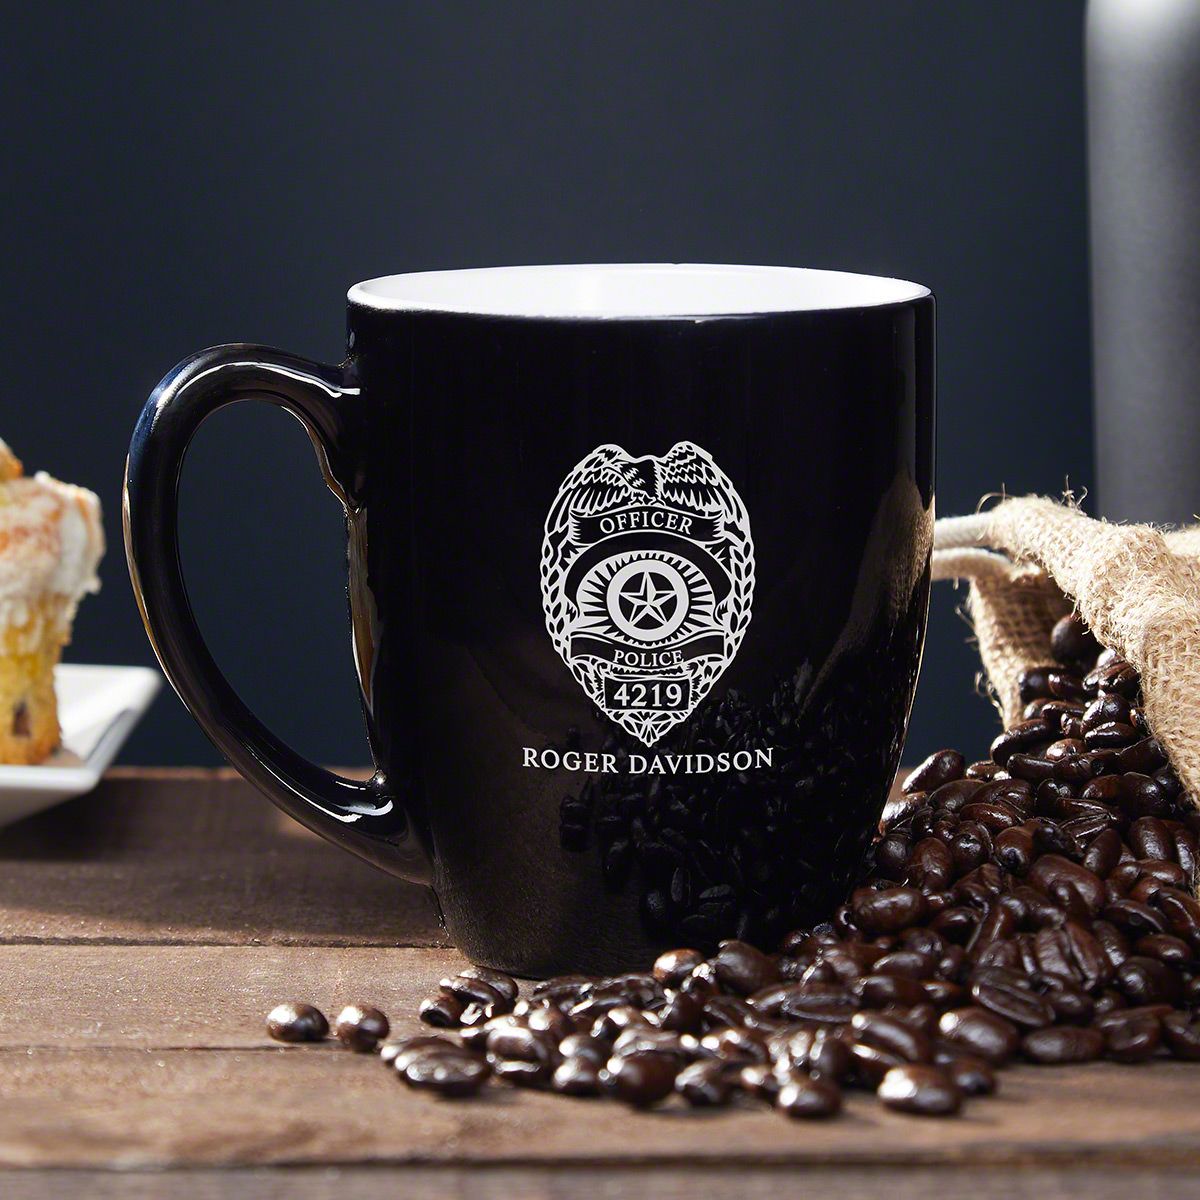 https://images.homewetbar.com/media/catalog/product/7/6/7661-police-badge-coffee-mug.jpg?store=default&image-type=image